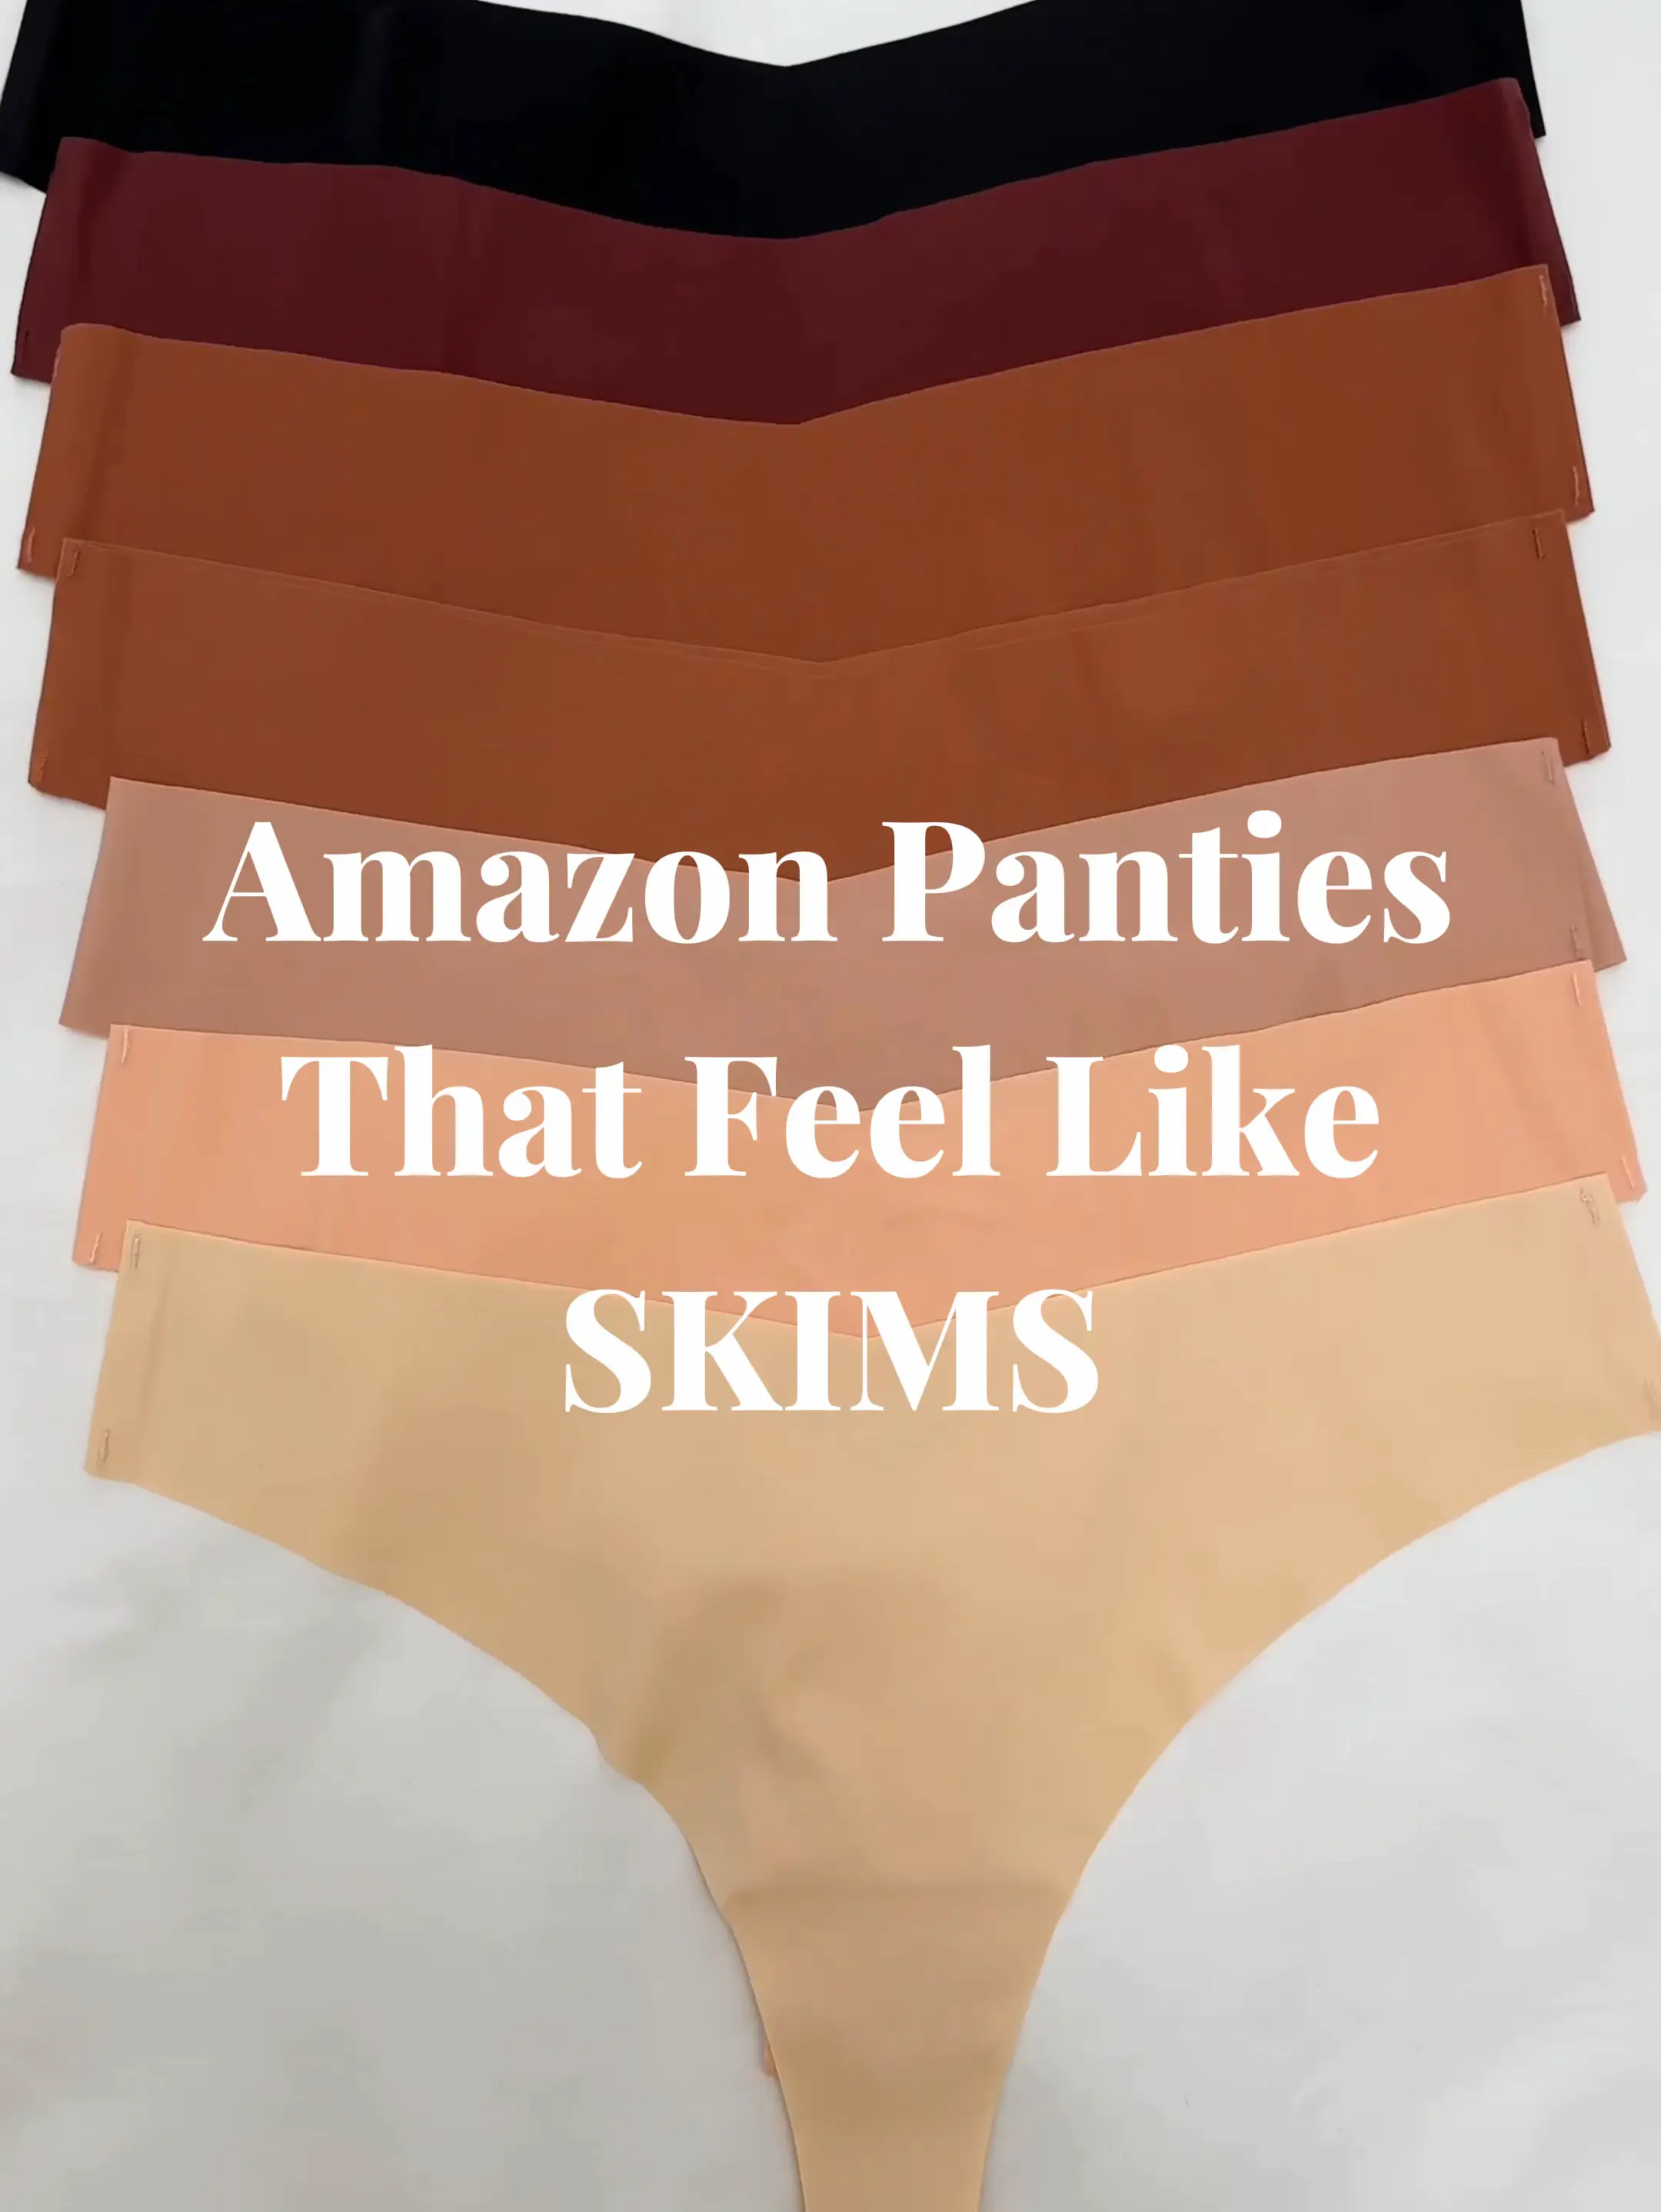 👀🫶🏼 SKIMS-inspired panties!